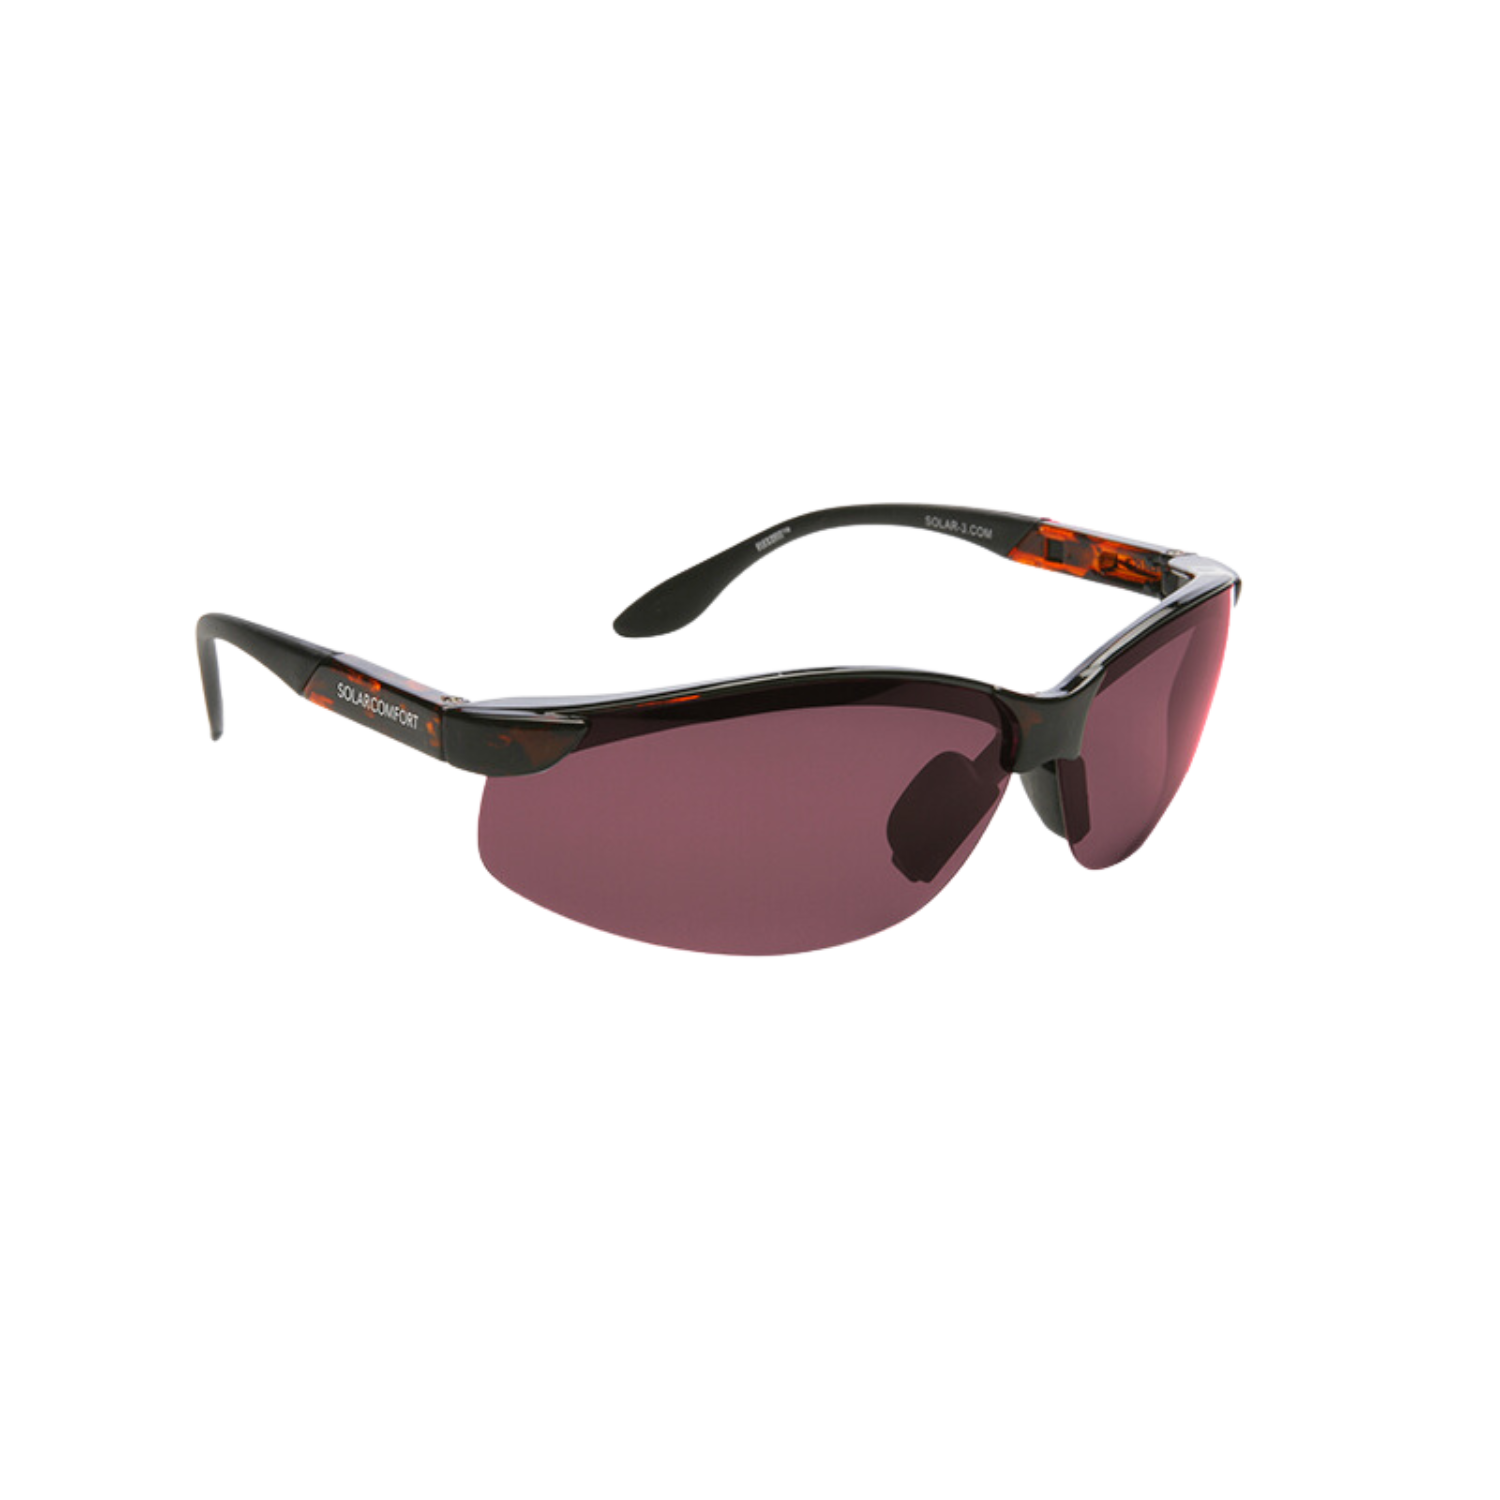 SolarComfort Polarized Sunglasses - Gray Tint